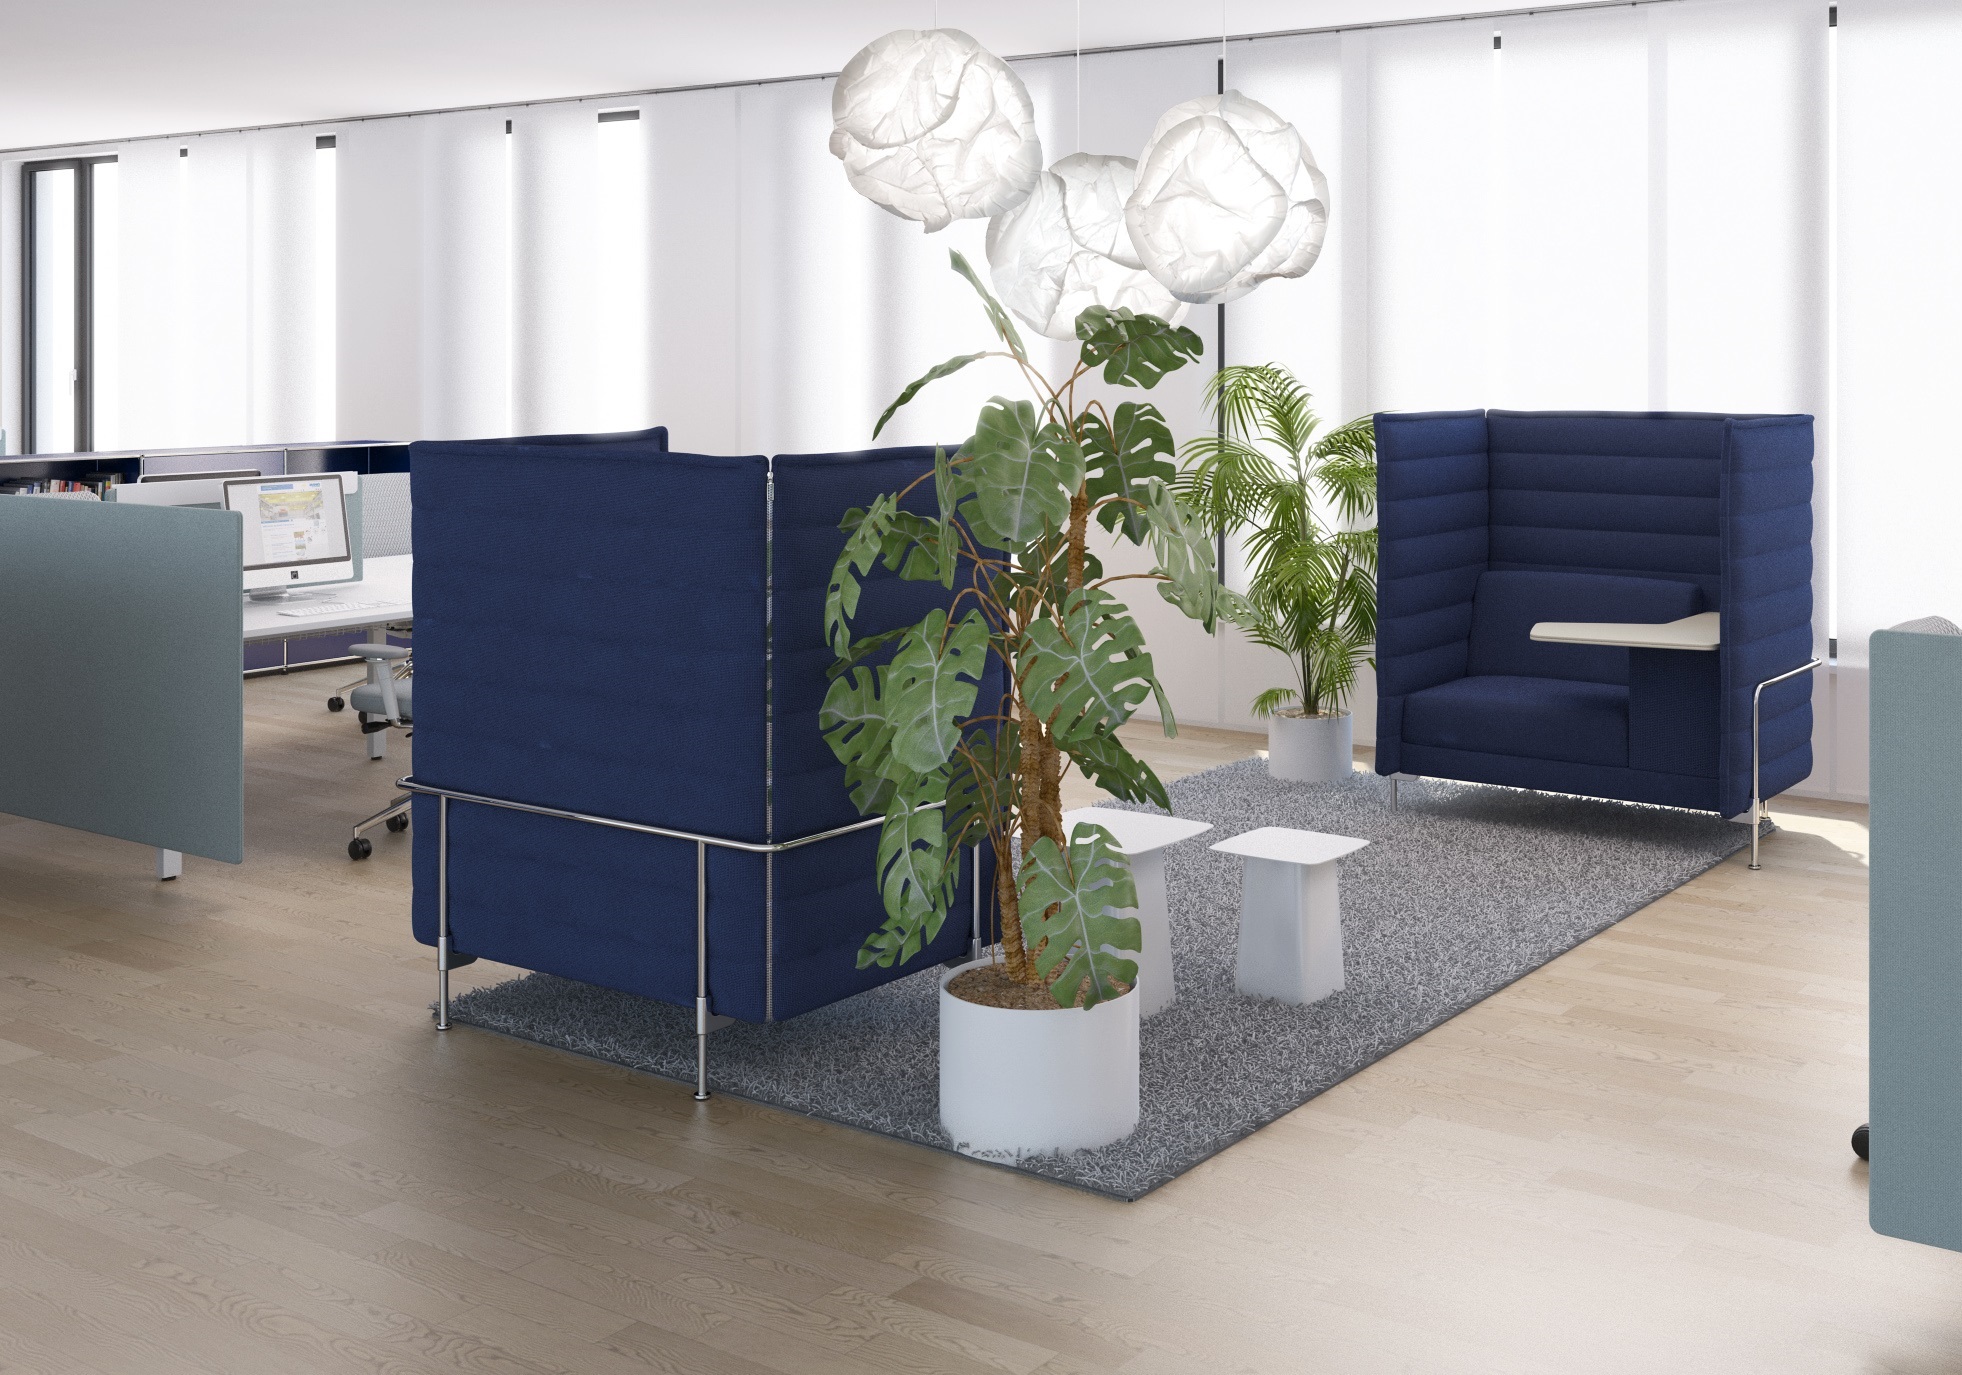 Sustainable Office plants